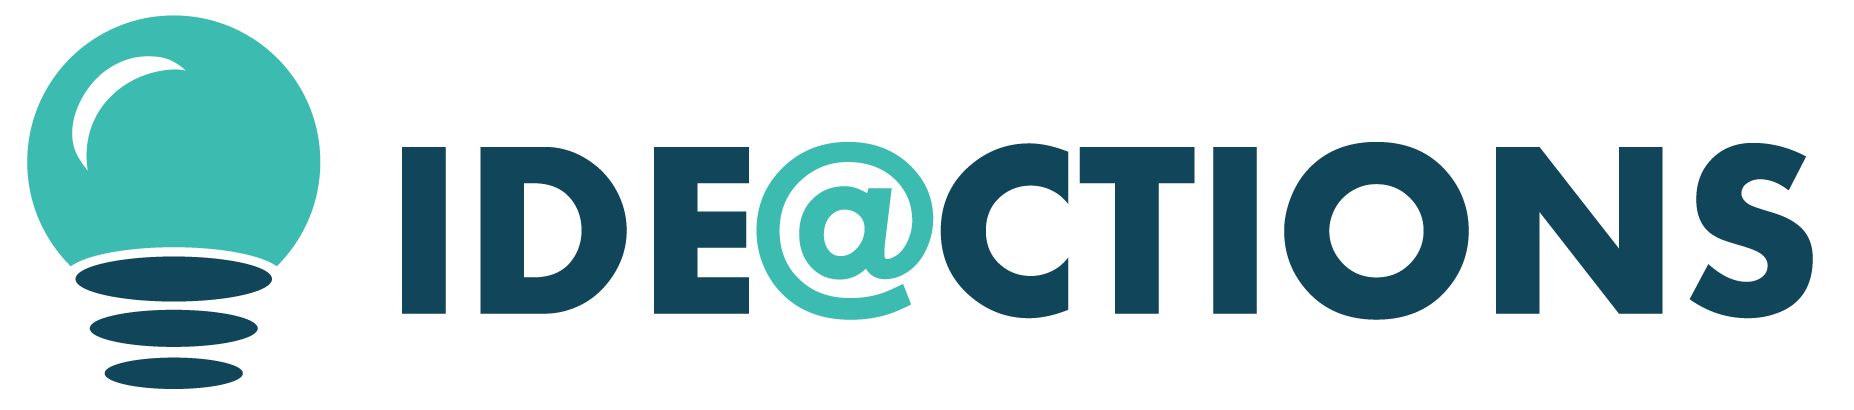 logo ideaction